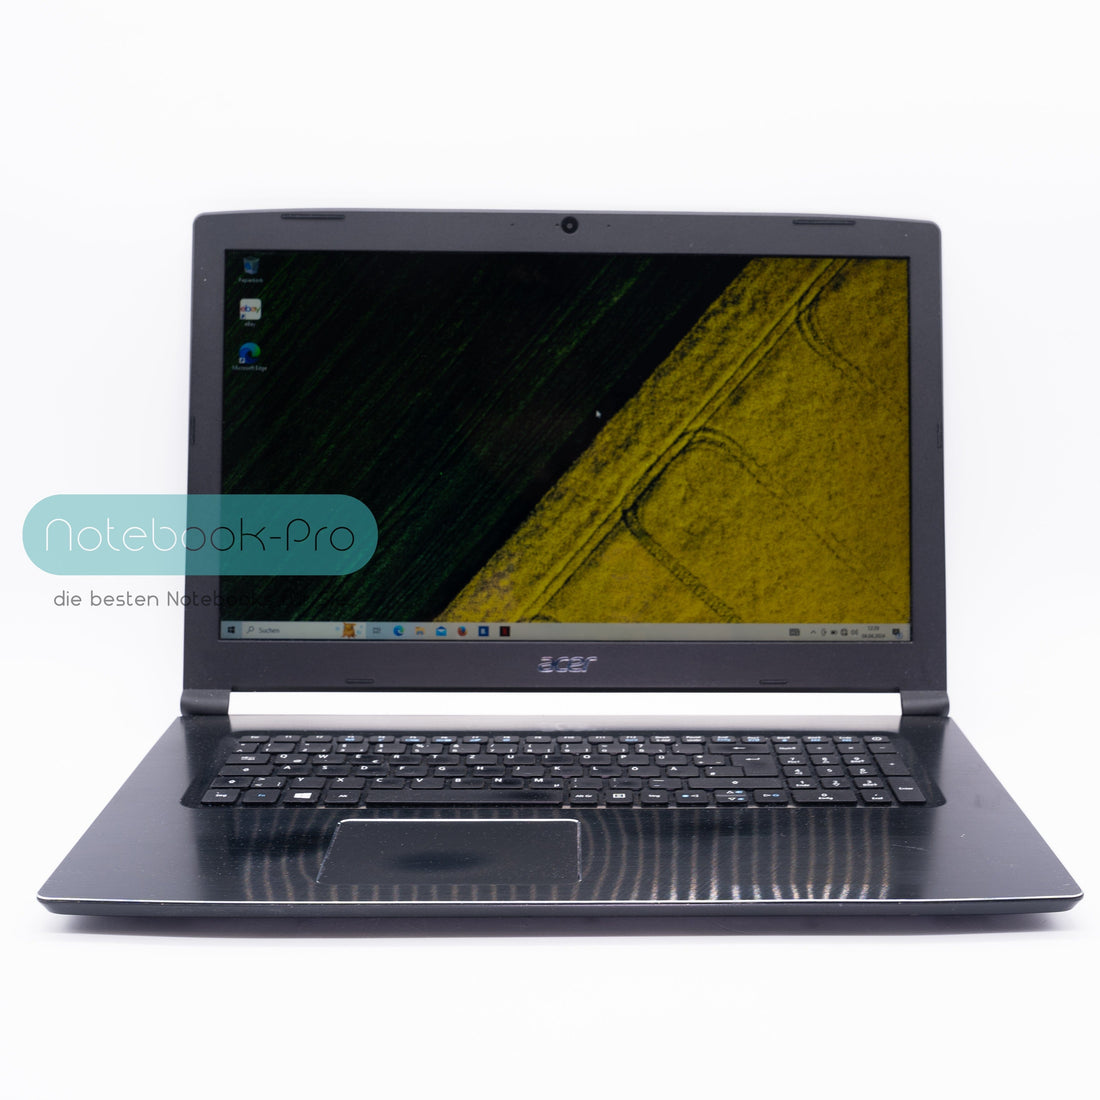 Acer Aspire A517 i7-8550U 20GB DDR4 500GB SSD 17,3 Zoll FHD Laptops Notebook-Pro Intel Core i7-8550U 20GB DDR4 500GB